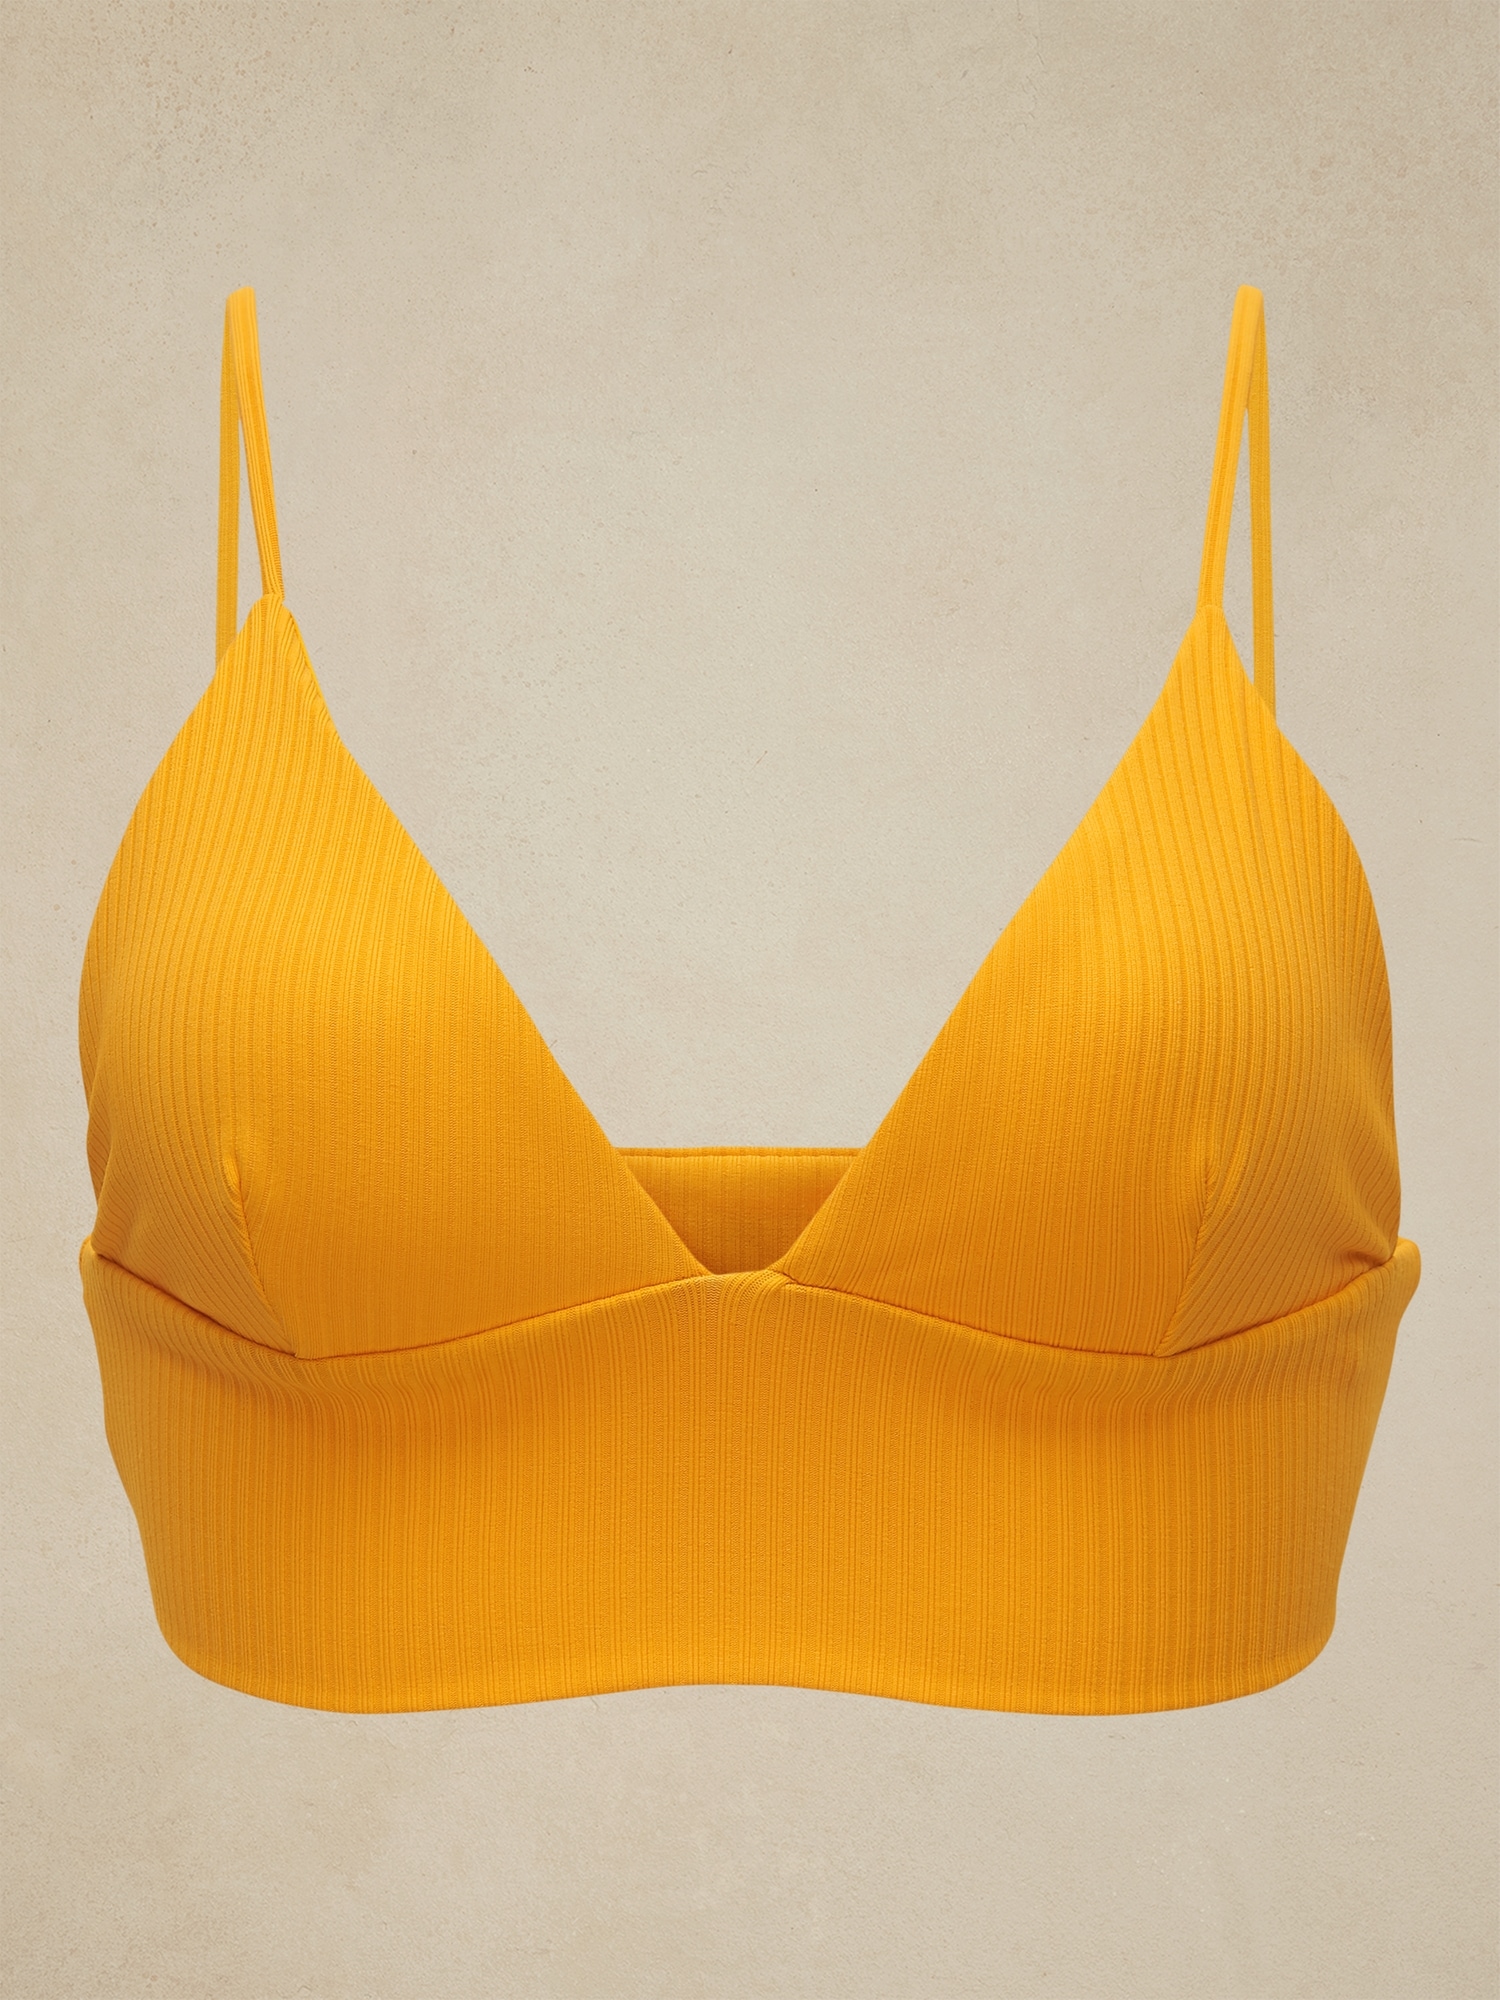 Eberjey | Alta Mare Dawn Bikini Top | Banana Republic